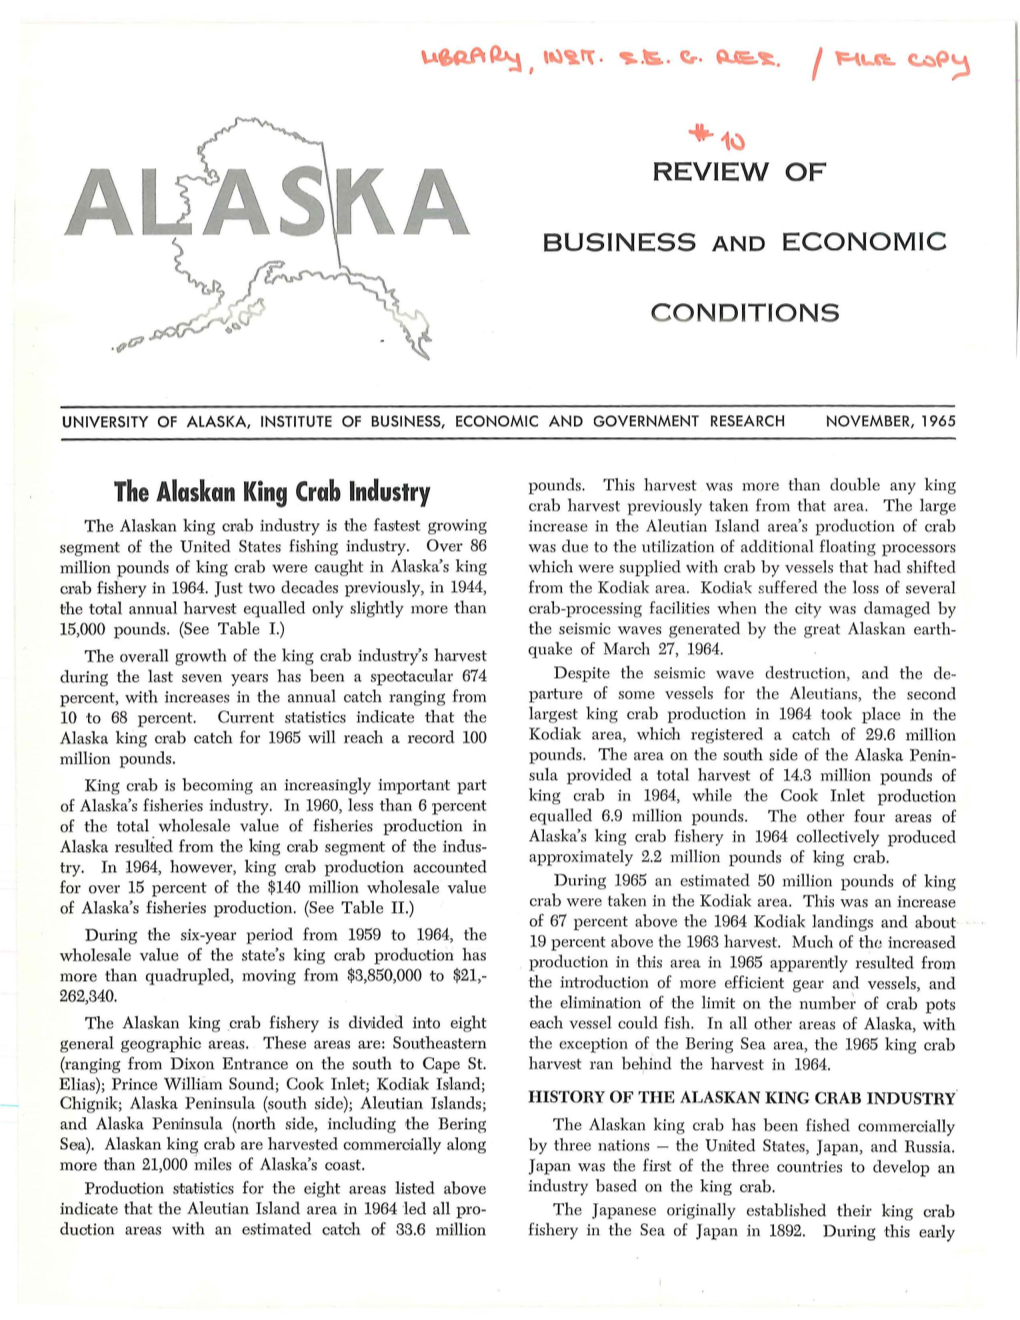 The Alaskan King Crab 1·Ndustry